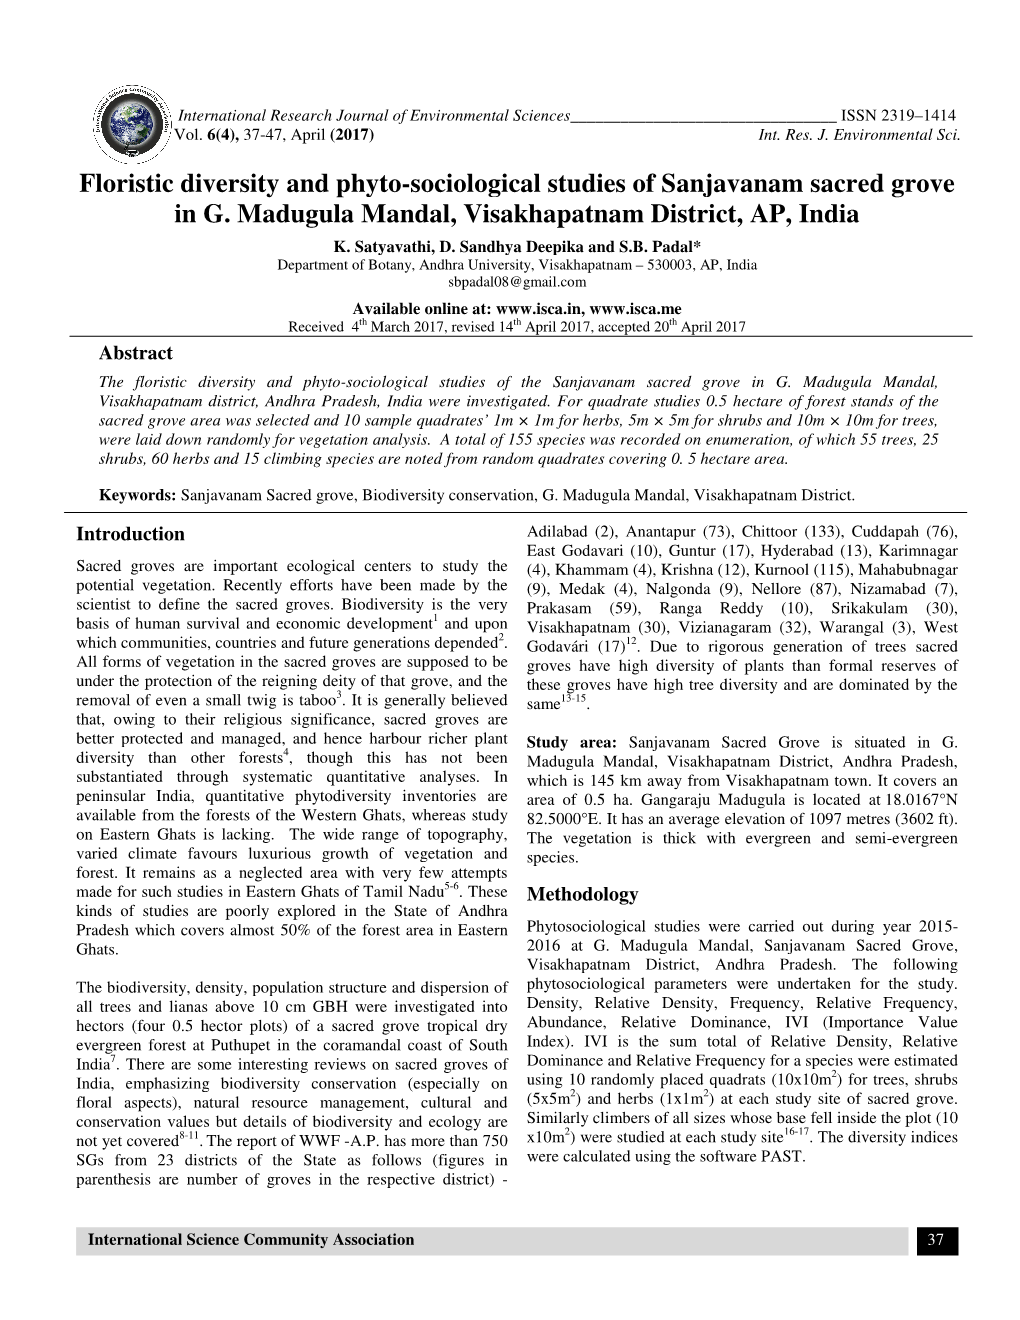 Floristic Diversity and Phyto in G. Madugula Mandal, Visak Hyto